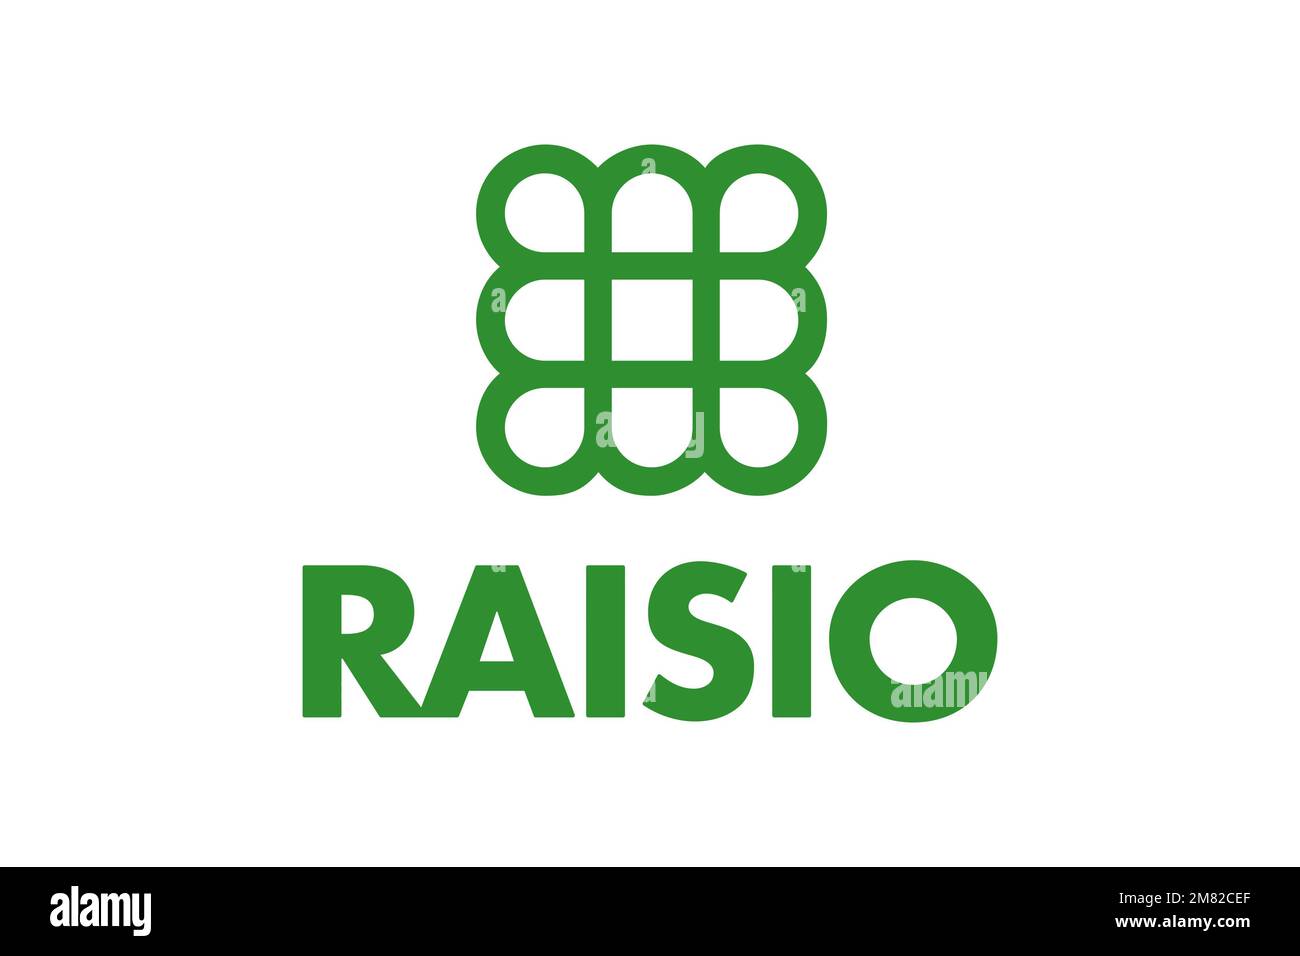 Raisio Group, logo, fond blanc Banque D'Images